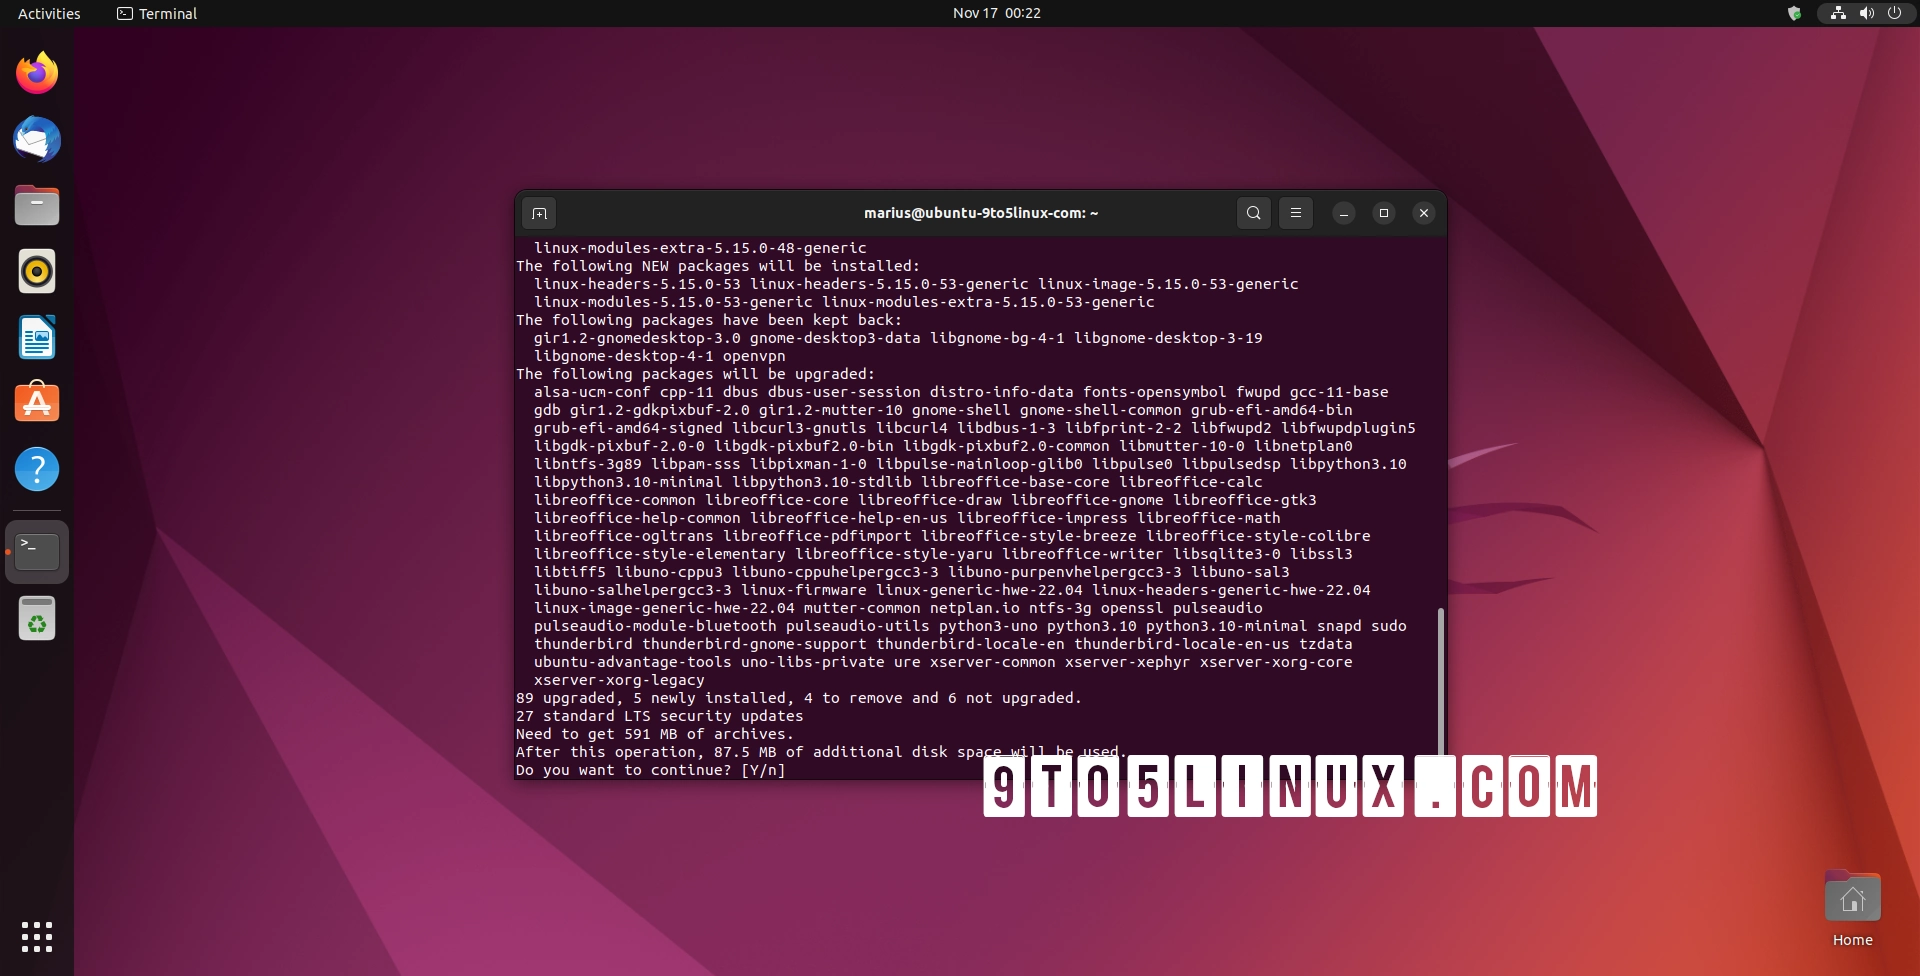 Ubuntu 6340-2: Linux kernel vulnerabilities